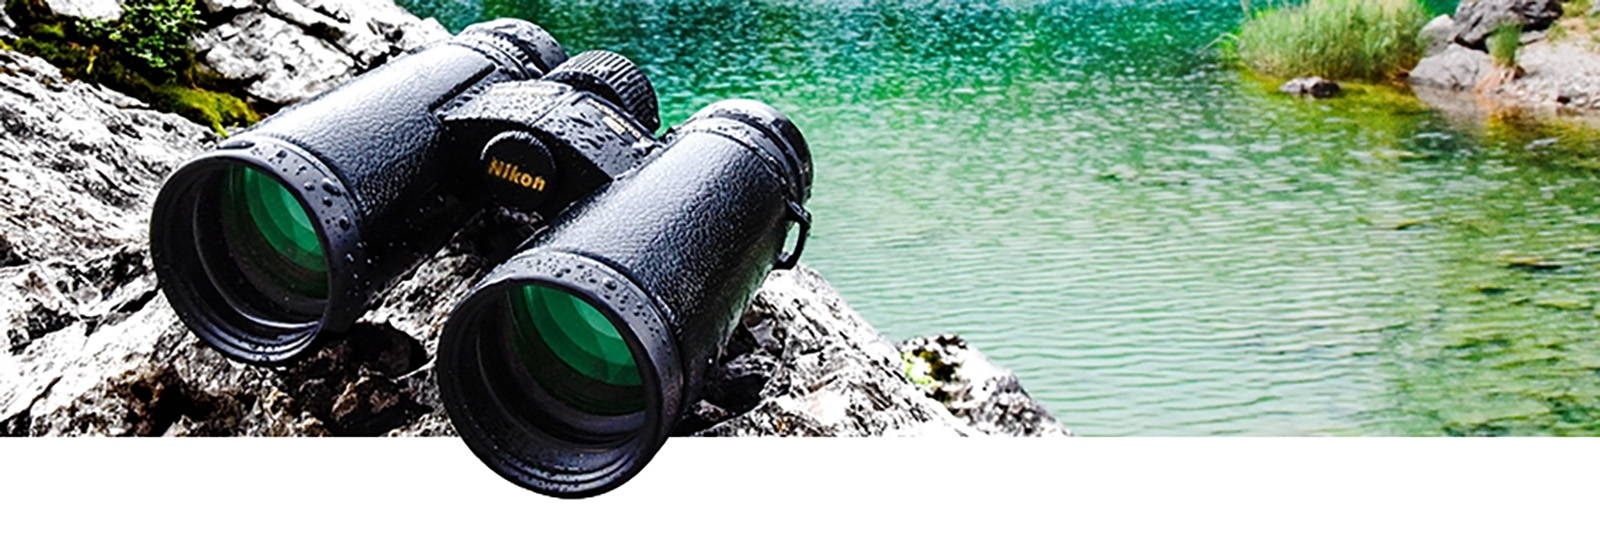 A pair of Nikon binoculars overlaid on a lake with rocky banks